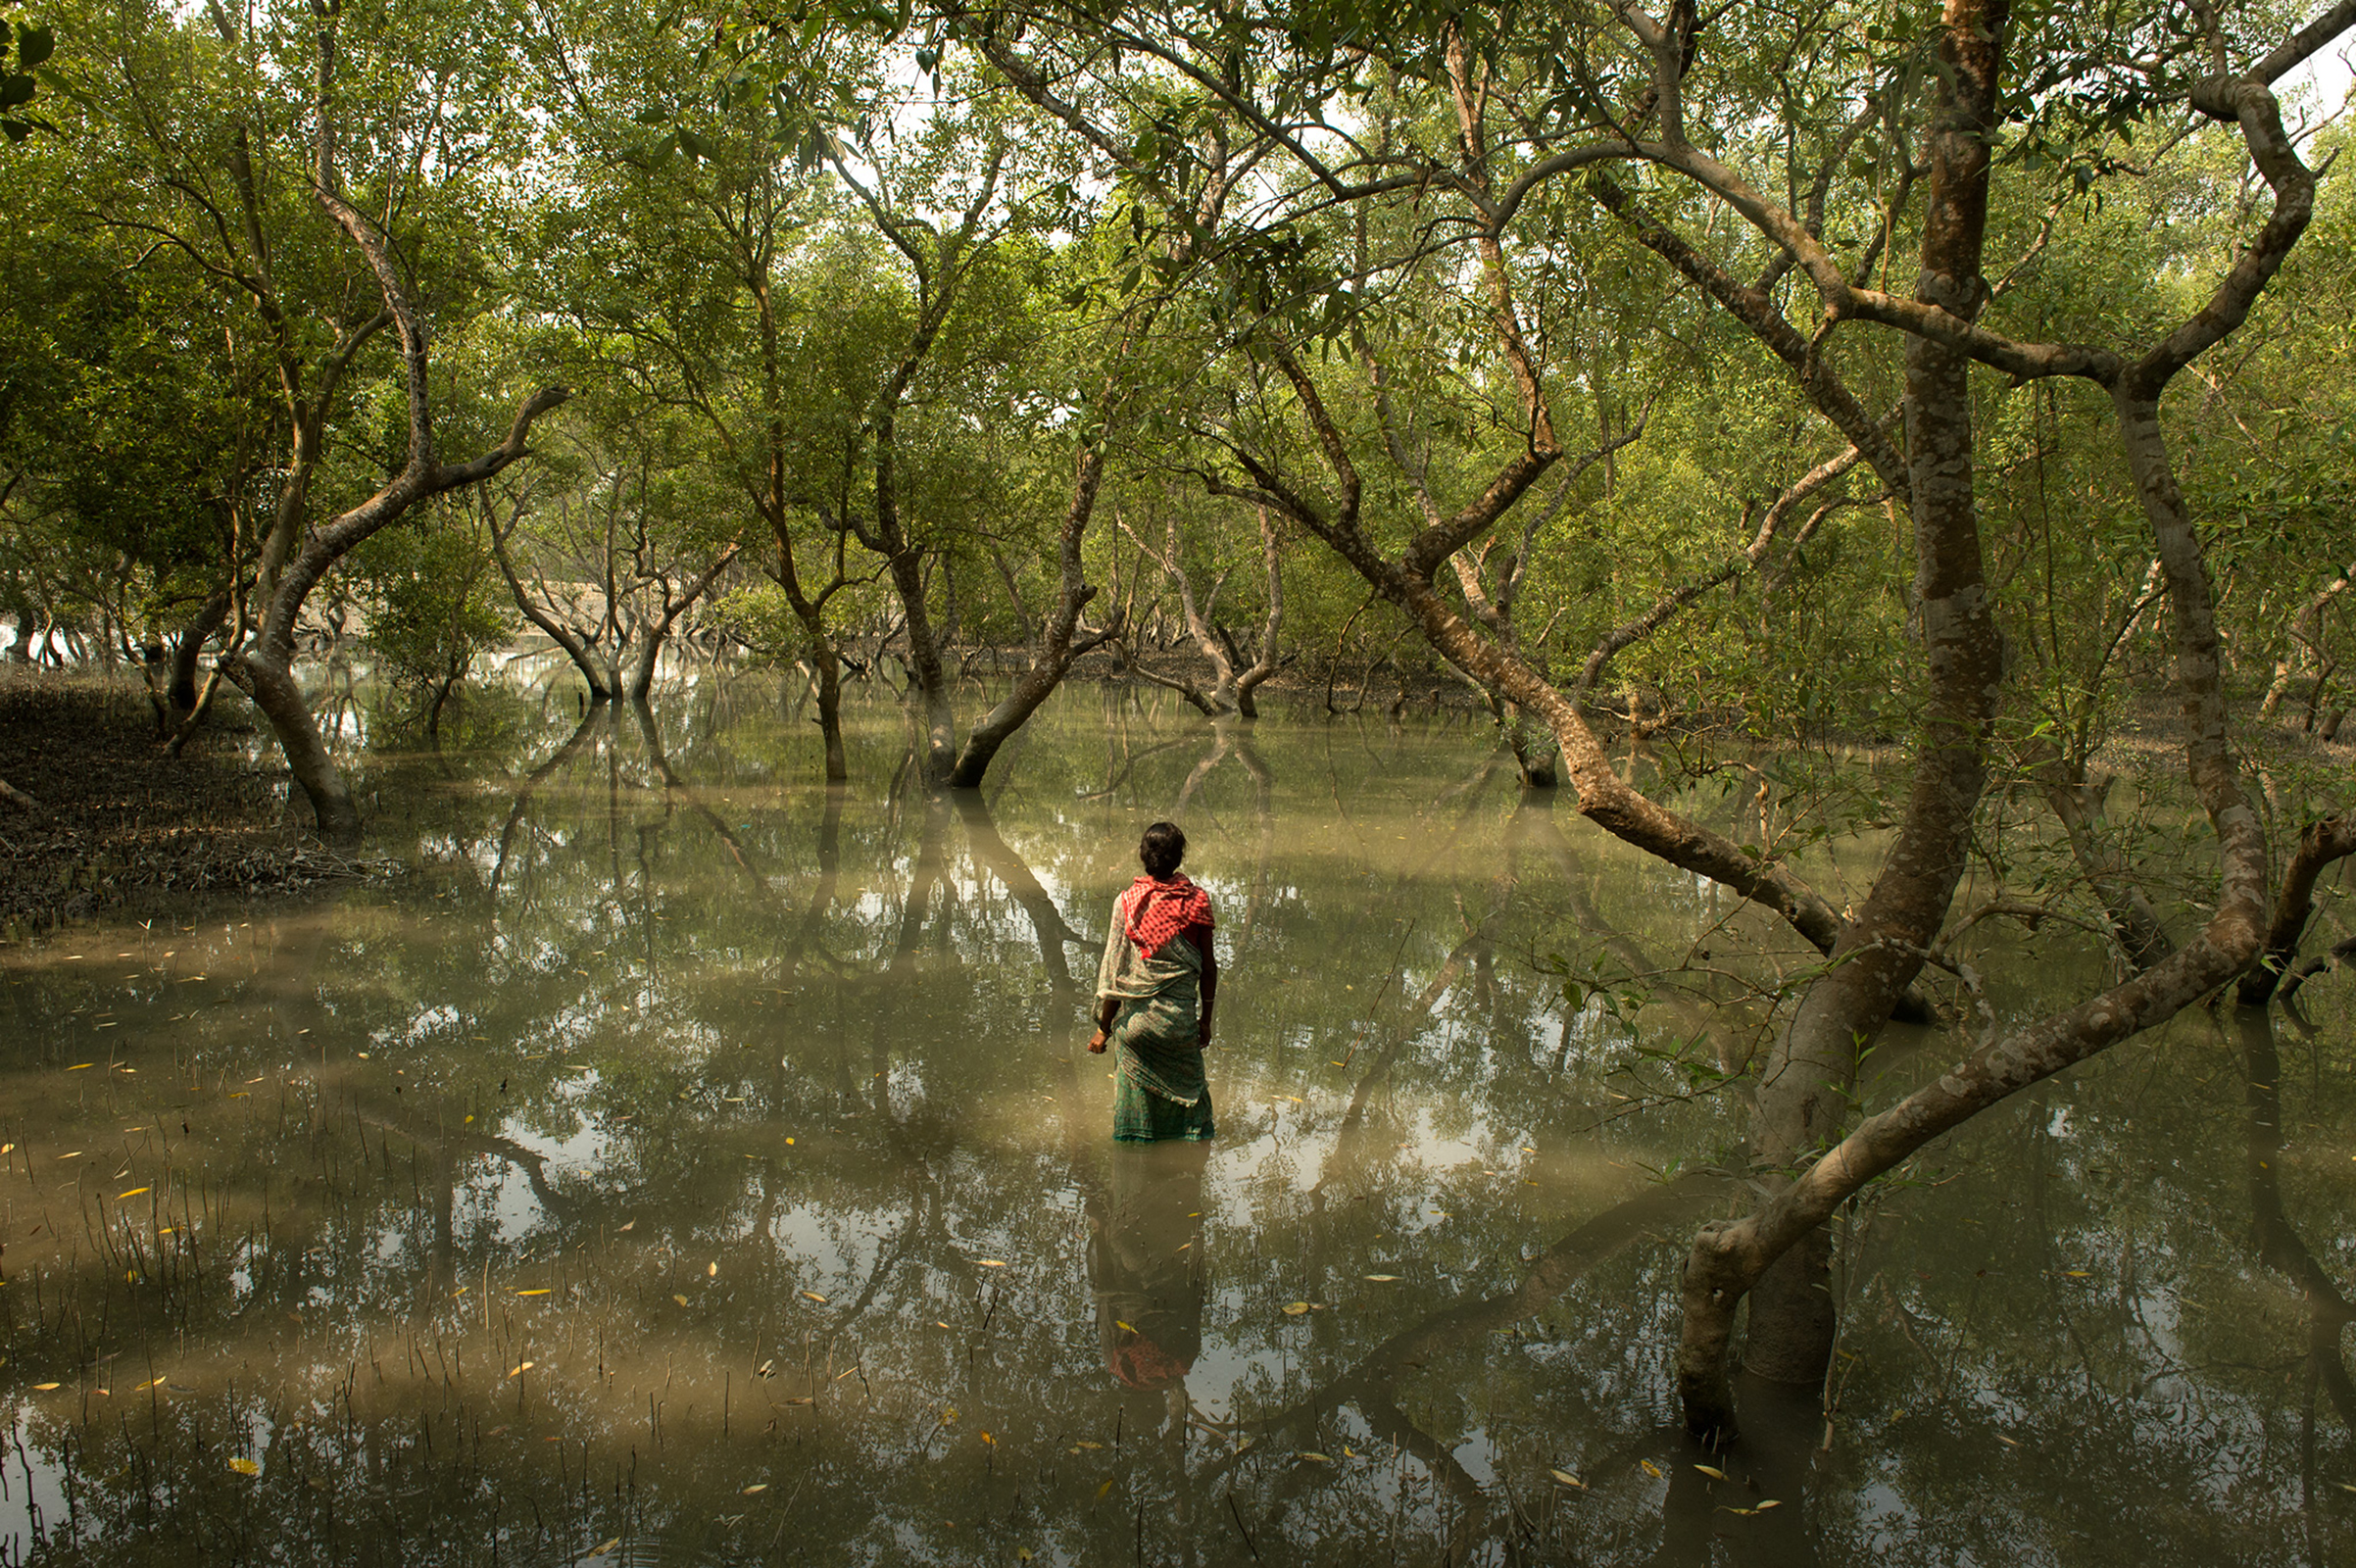 Sundarbans, India